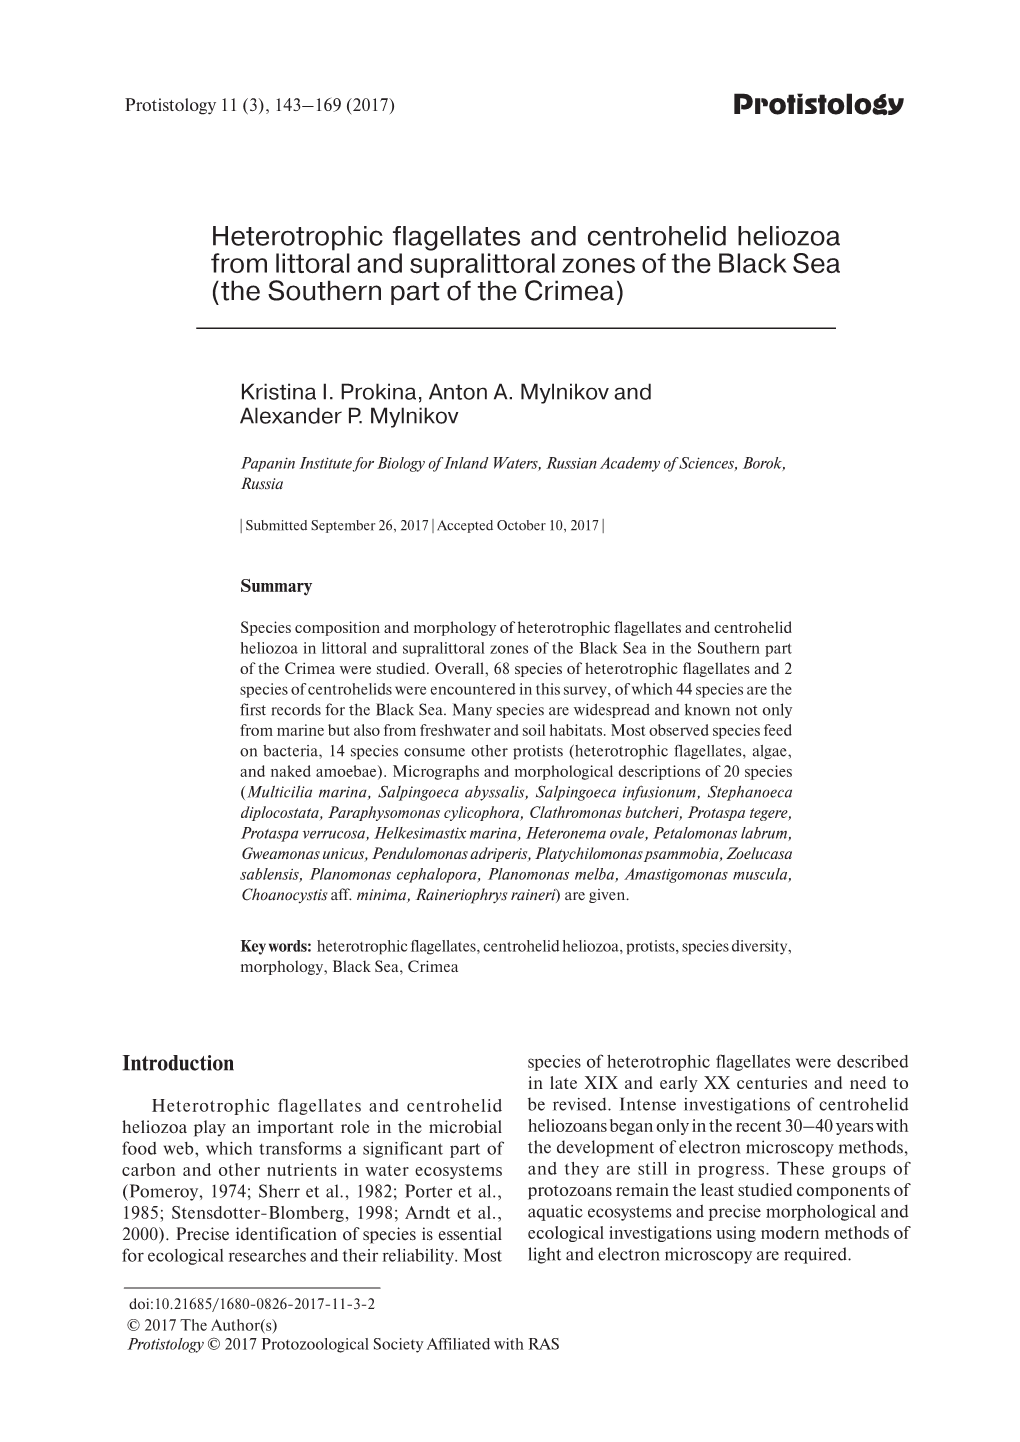 Protistology Heterotrophic Flagellates and Centrohelid Heliozoa From